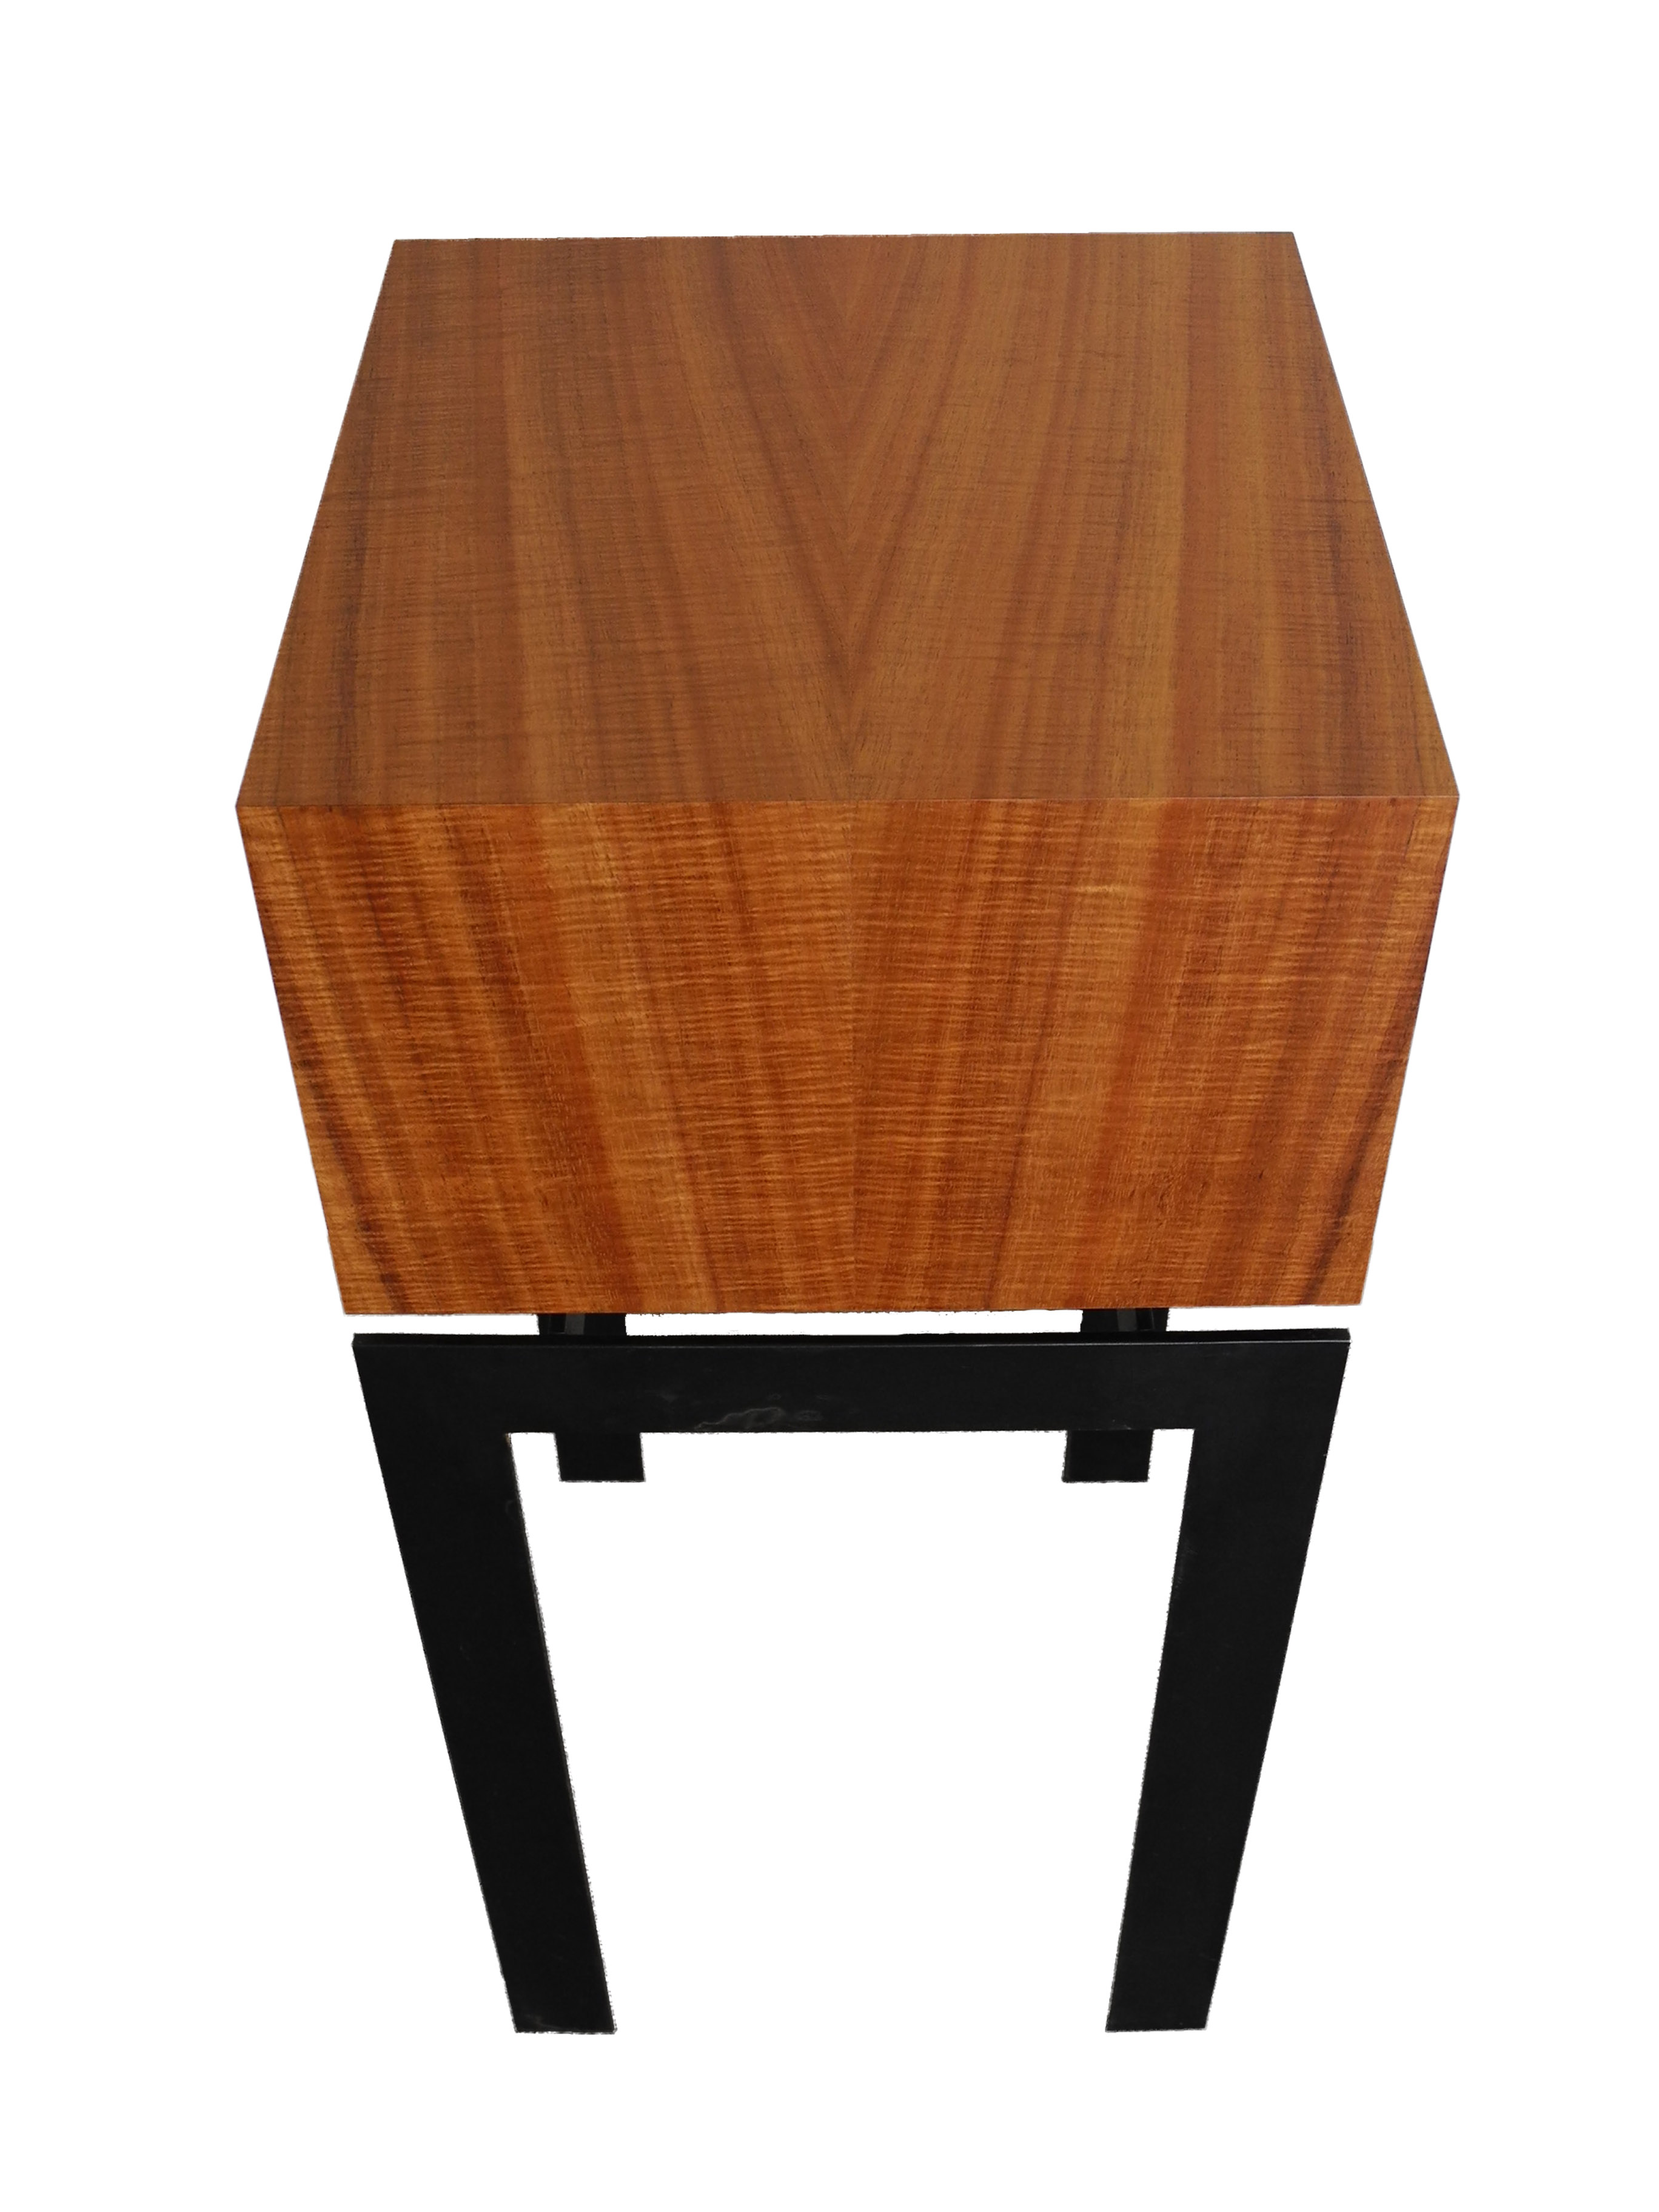 display pedestal end table square koa wood